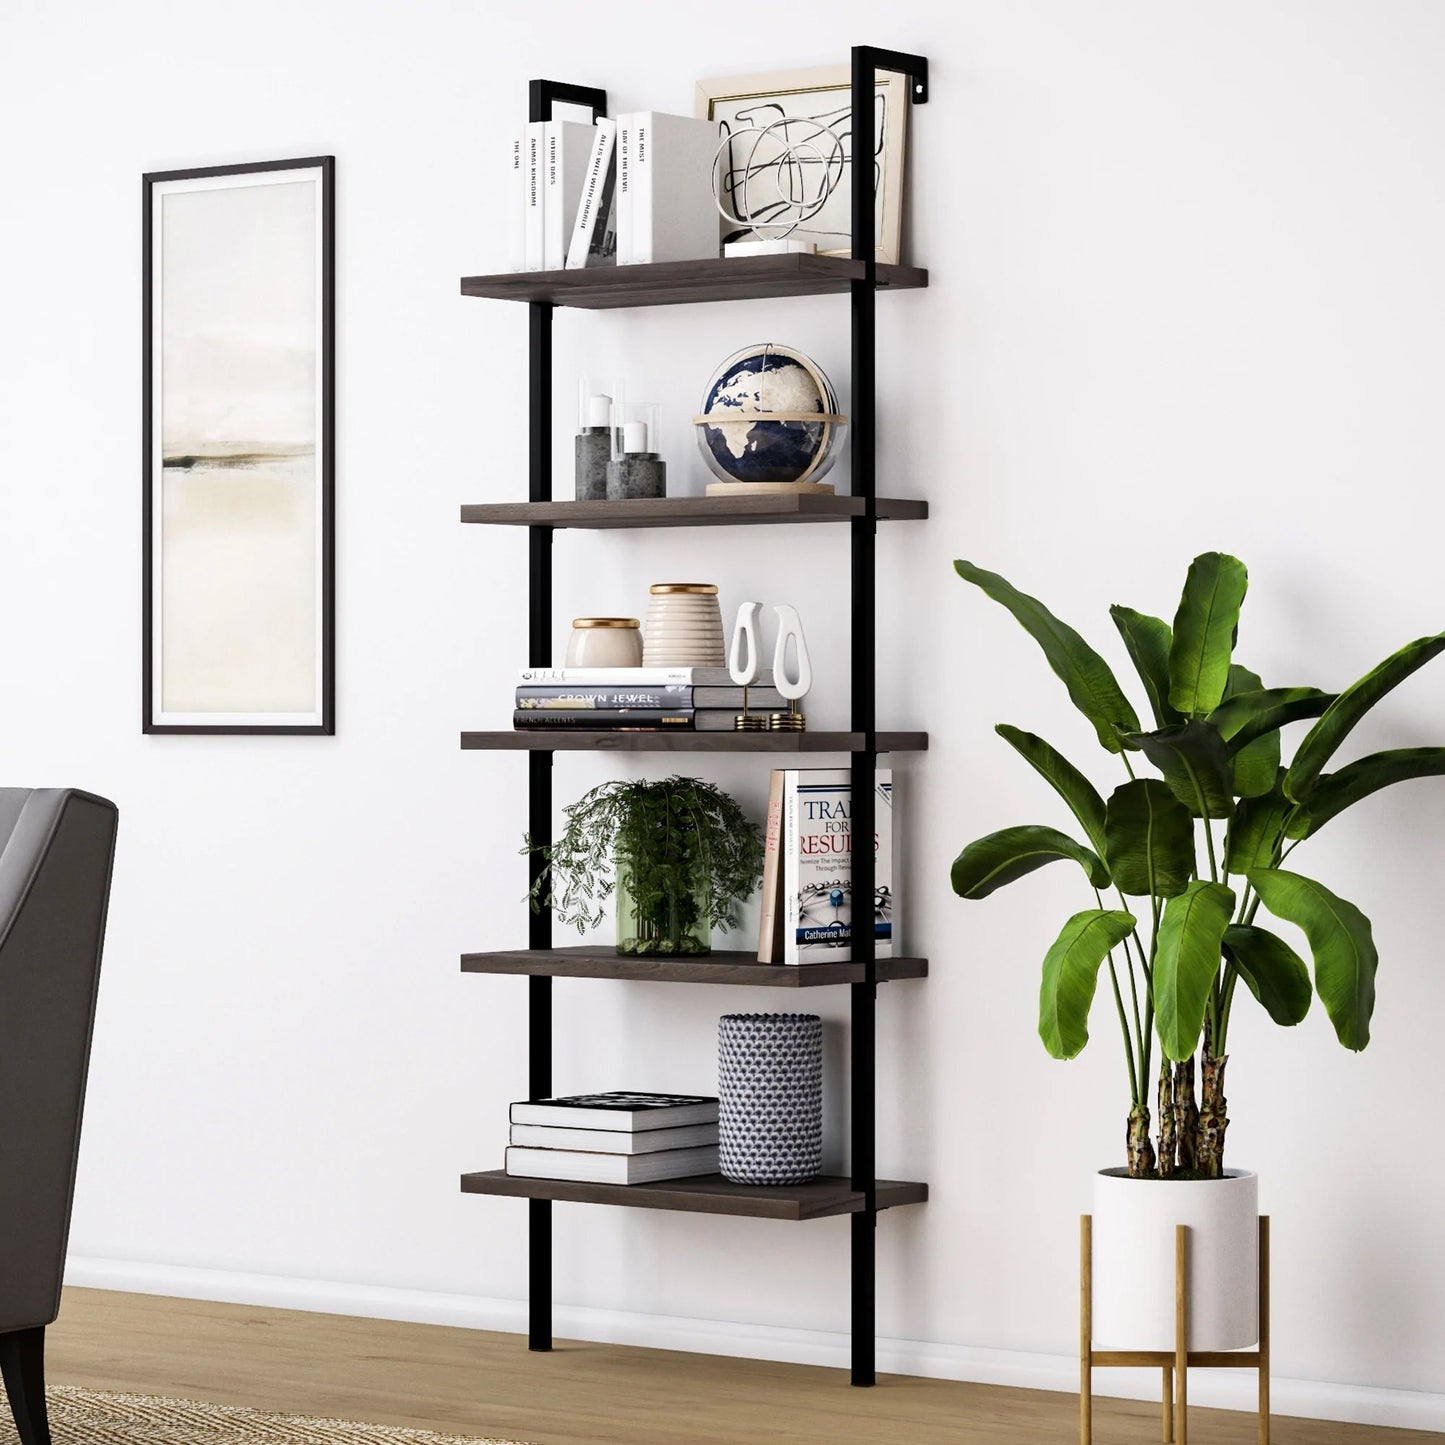 Nathan James Theo 5-Shelf Wood Modern Bookcase, Open Wall Mount Ladder Bookshelf with Industrial Metal Frame, Dark Brown Nutmeg/Black